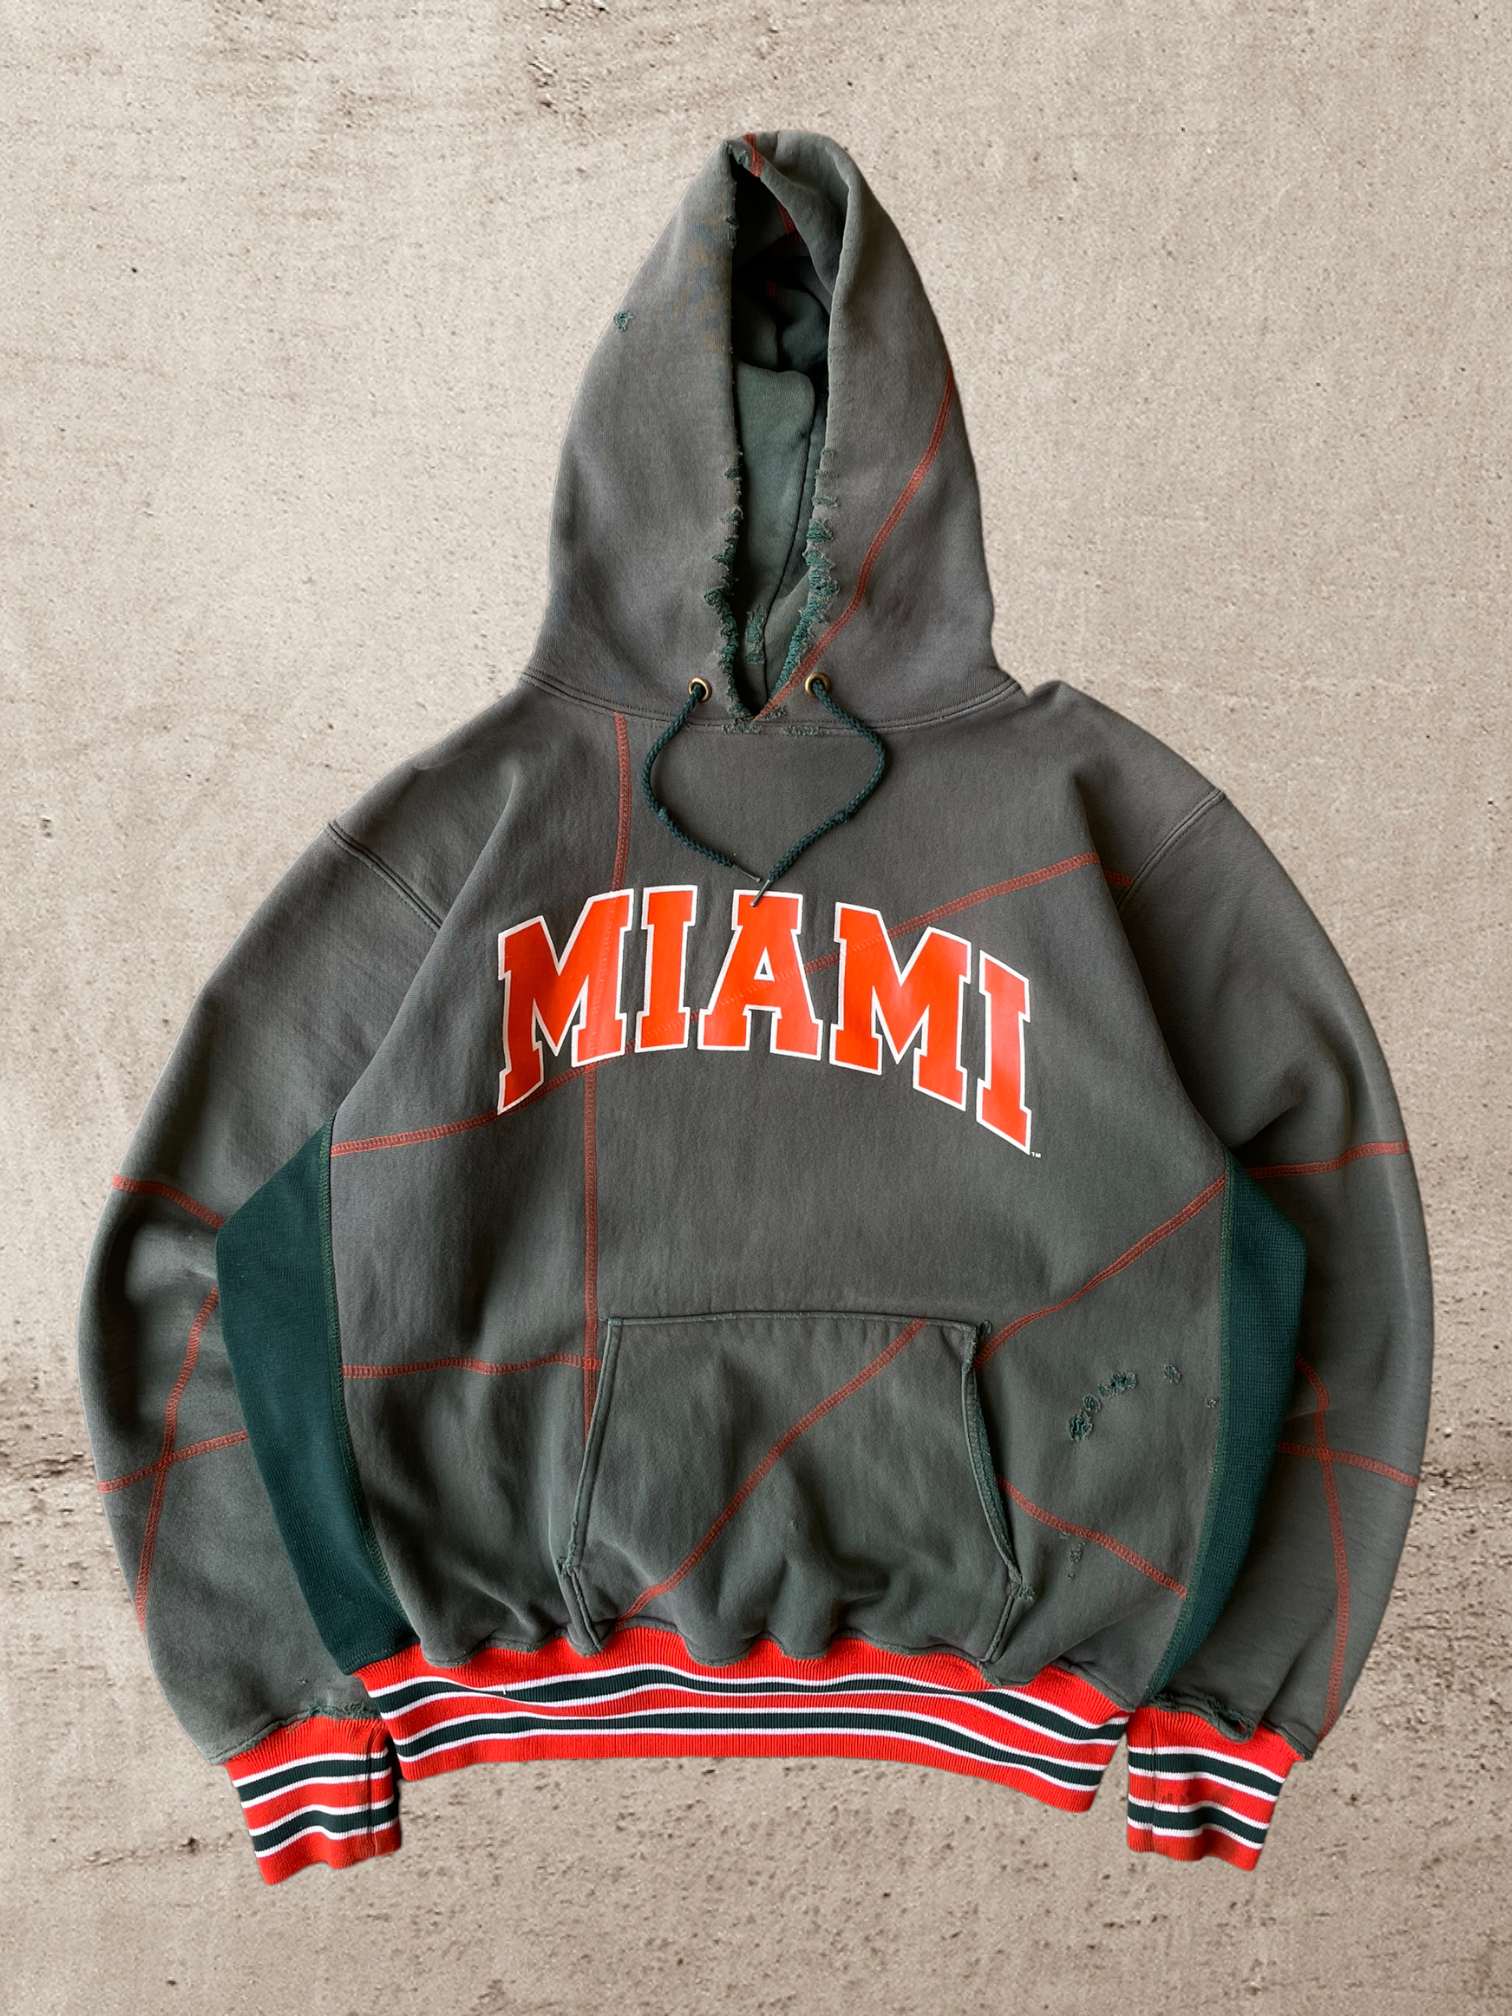 90s University of Miami Contrast Stitching Sweatshirt - XL